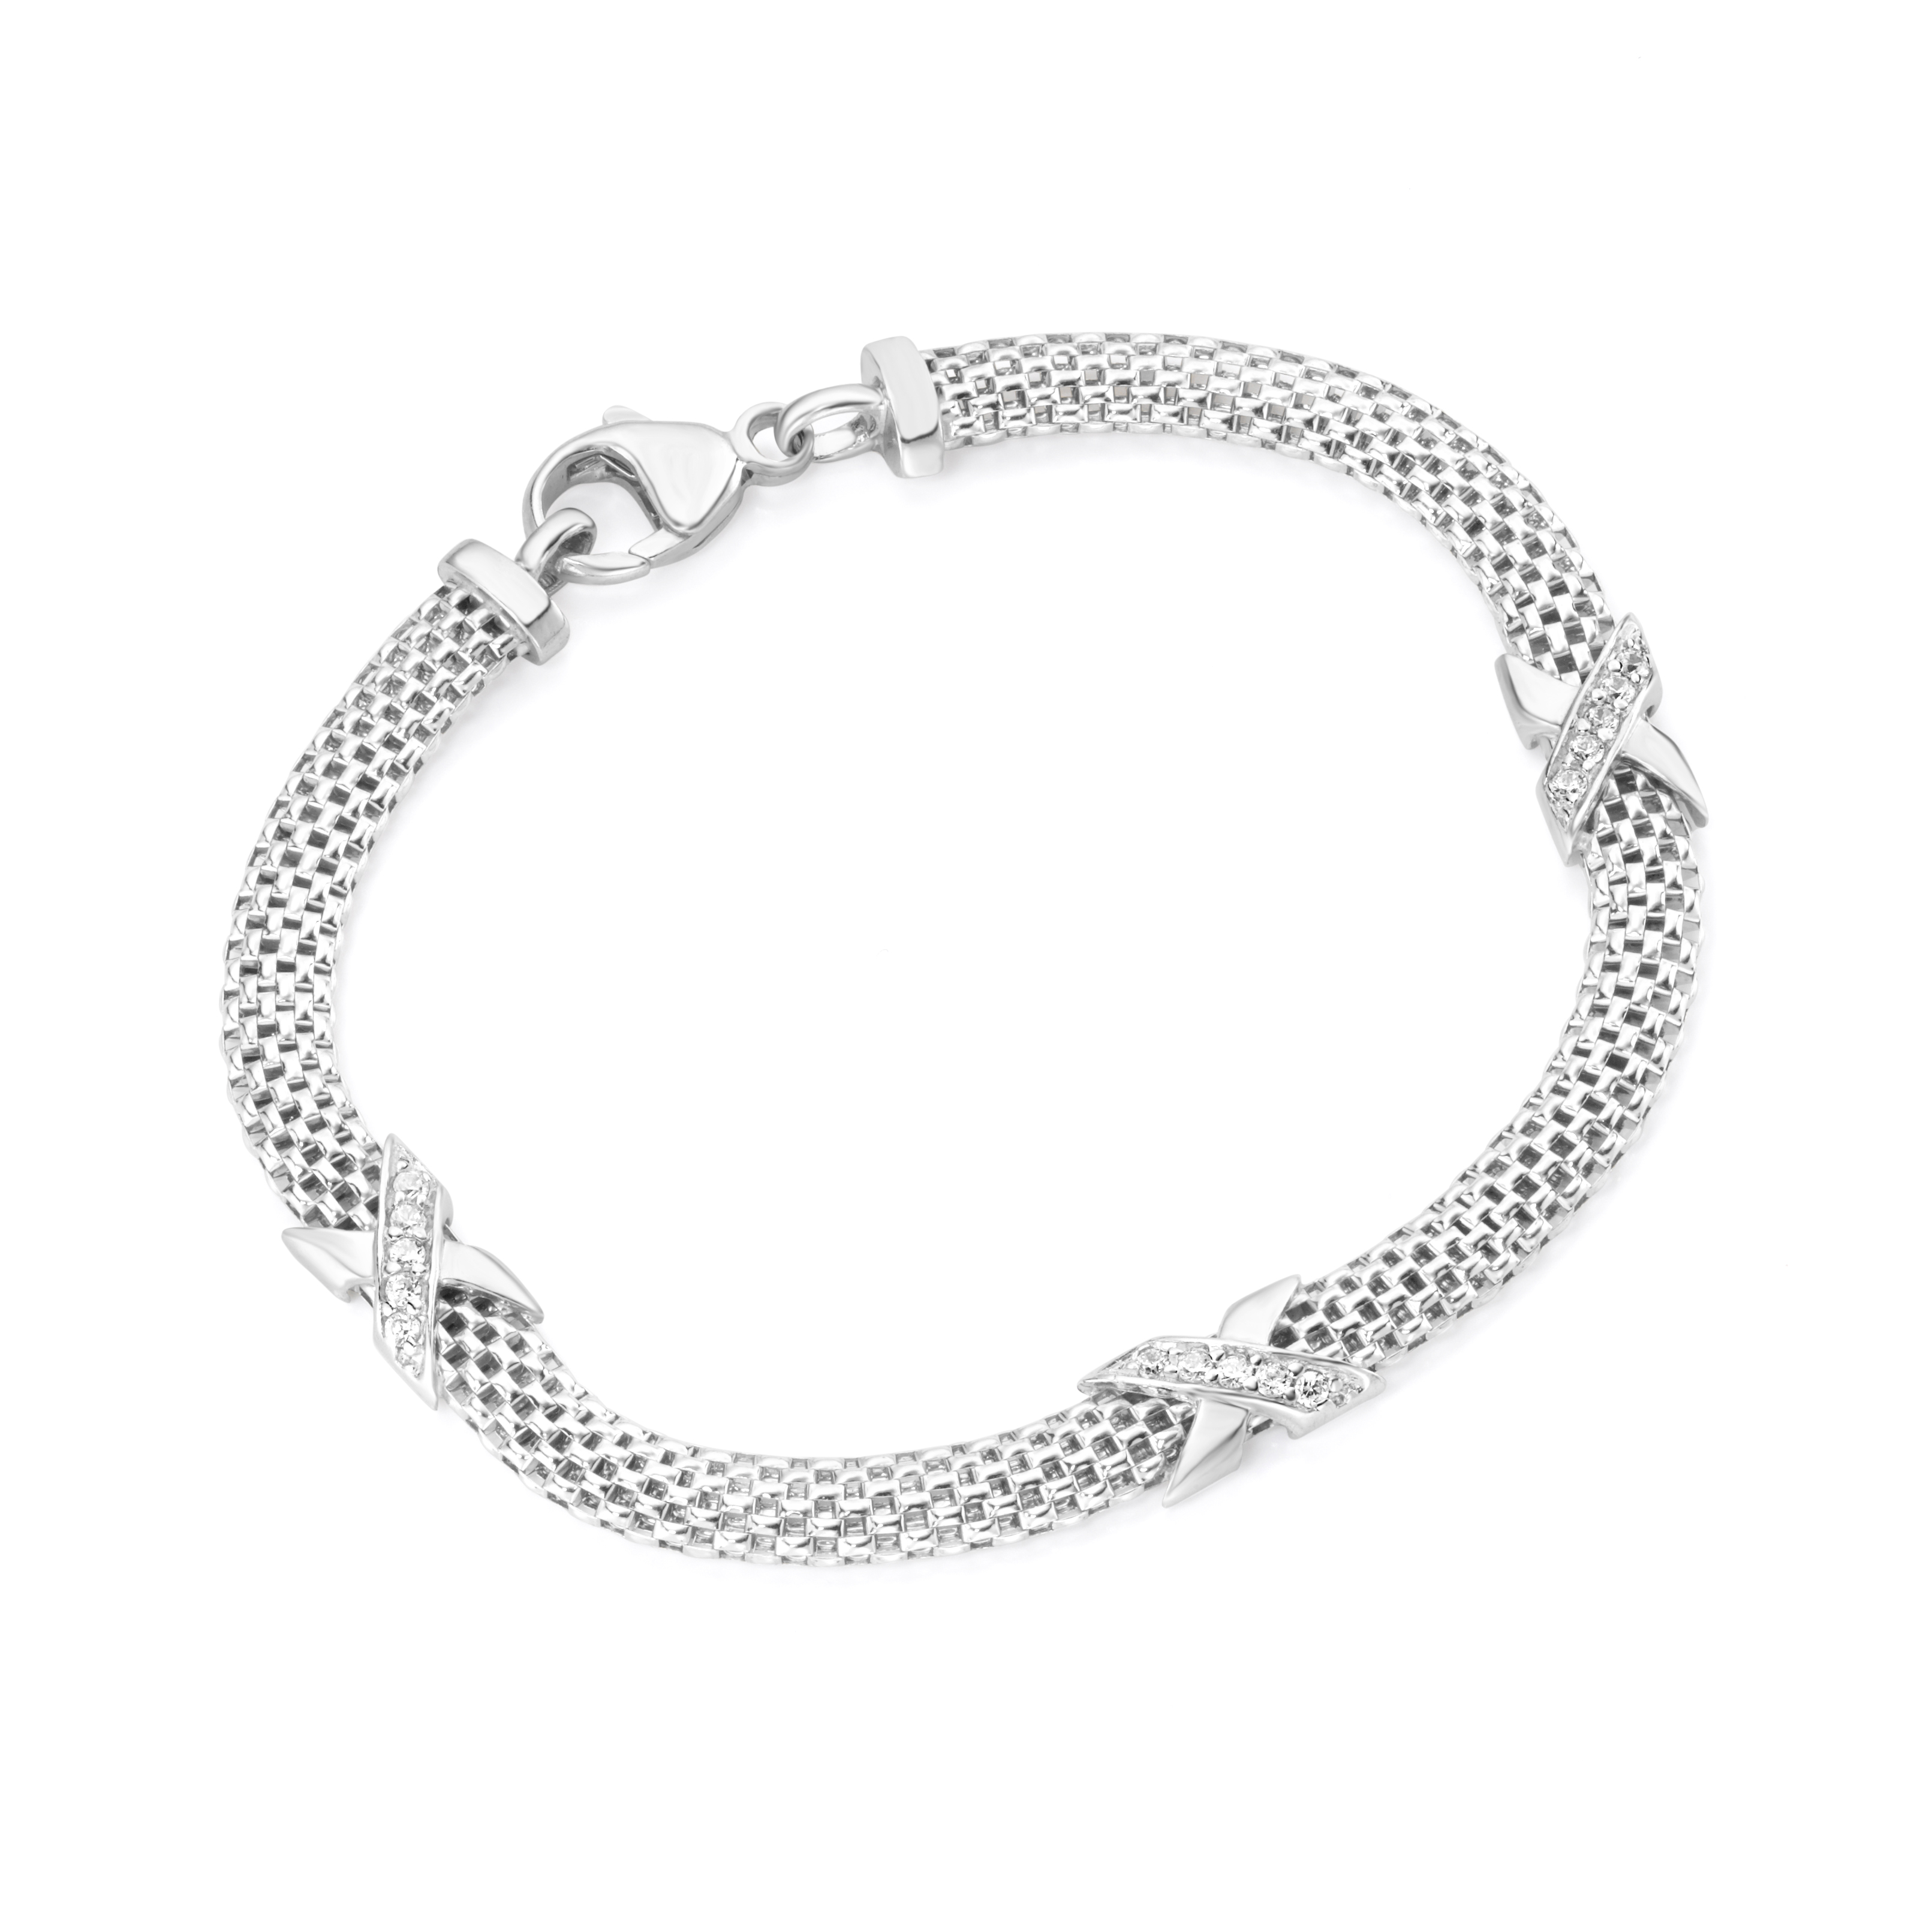 Armband Silber rhod. mit Zirkonia 92010593190